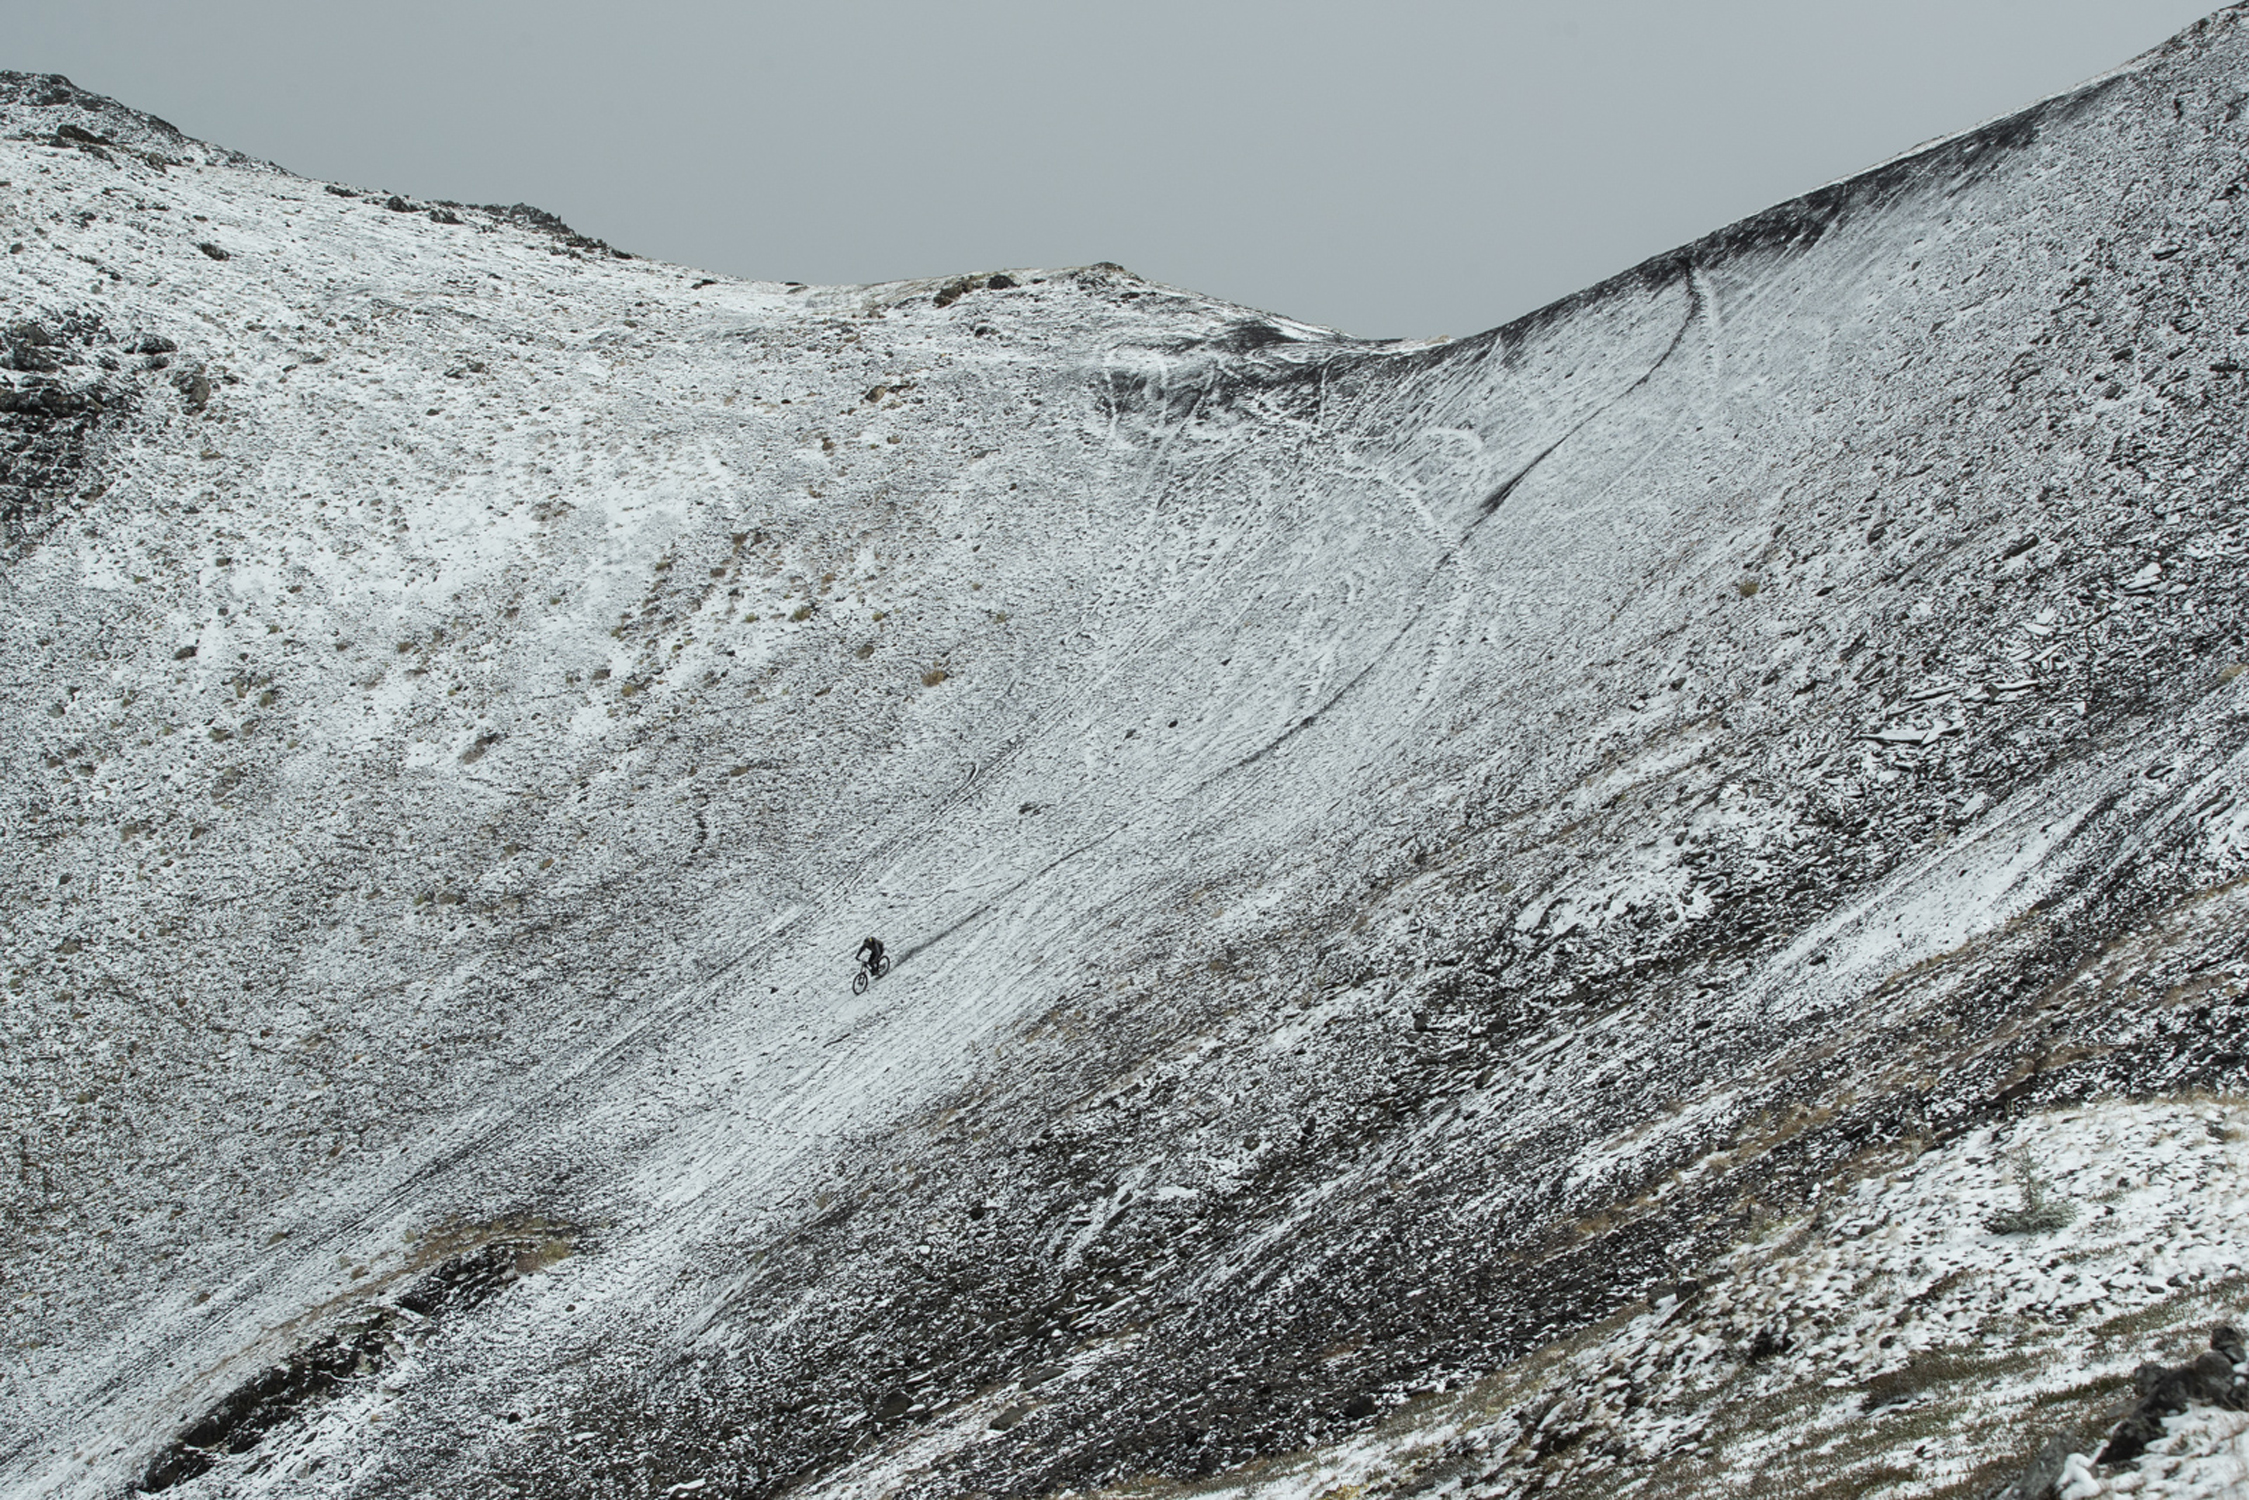 Kurt Sorge riding down a snow covered mountain 